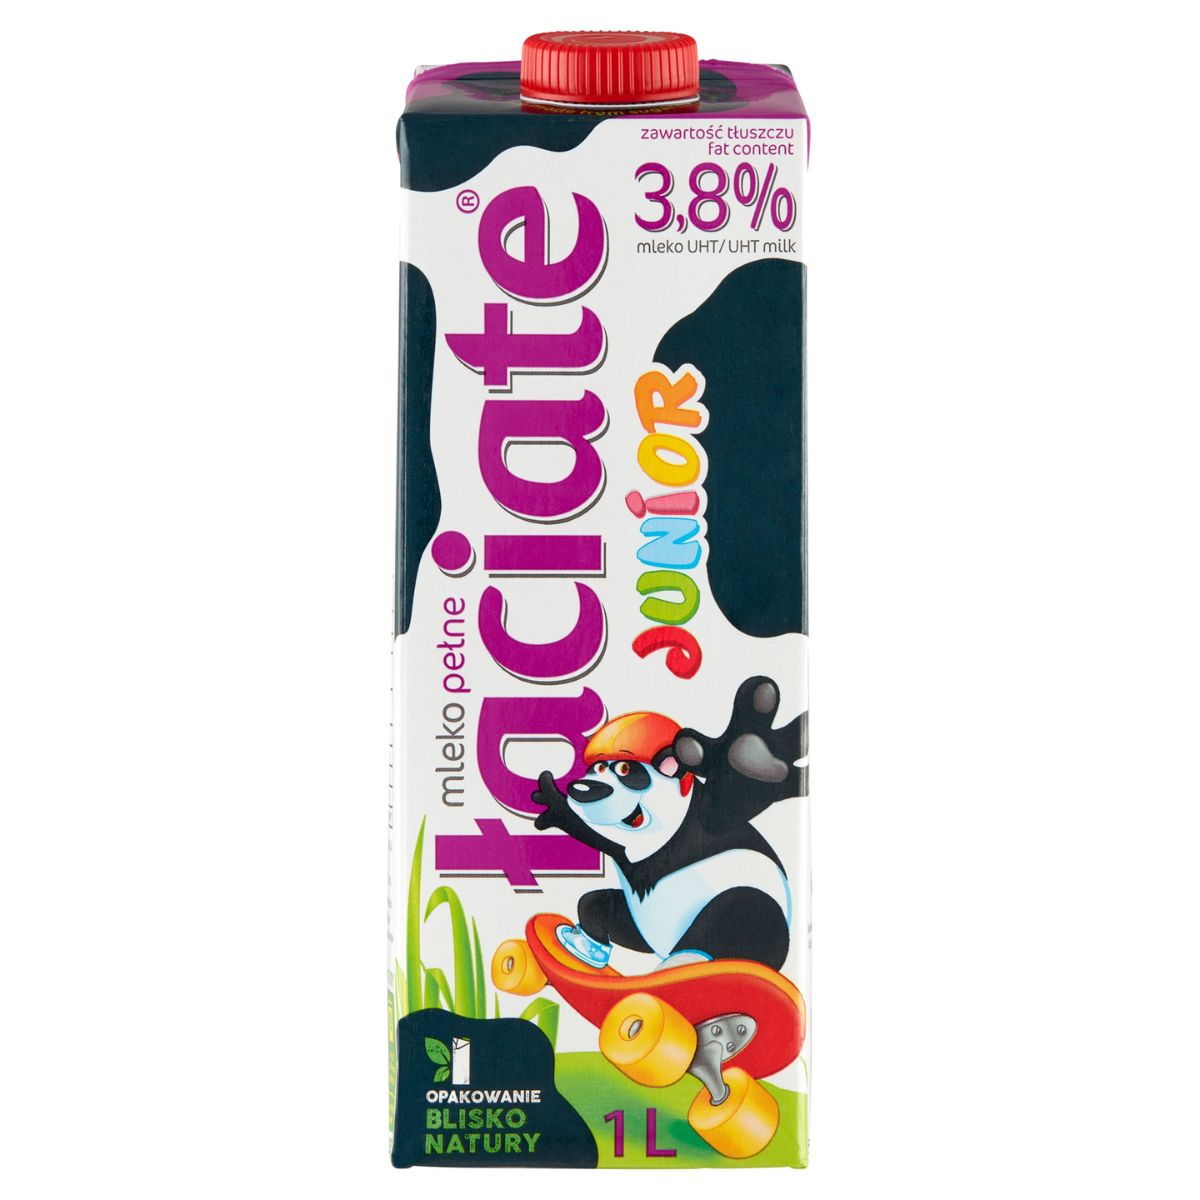 A carton of Laciate junior milk with a panda on it.